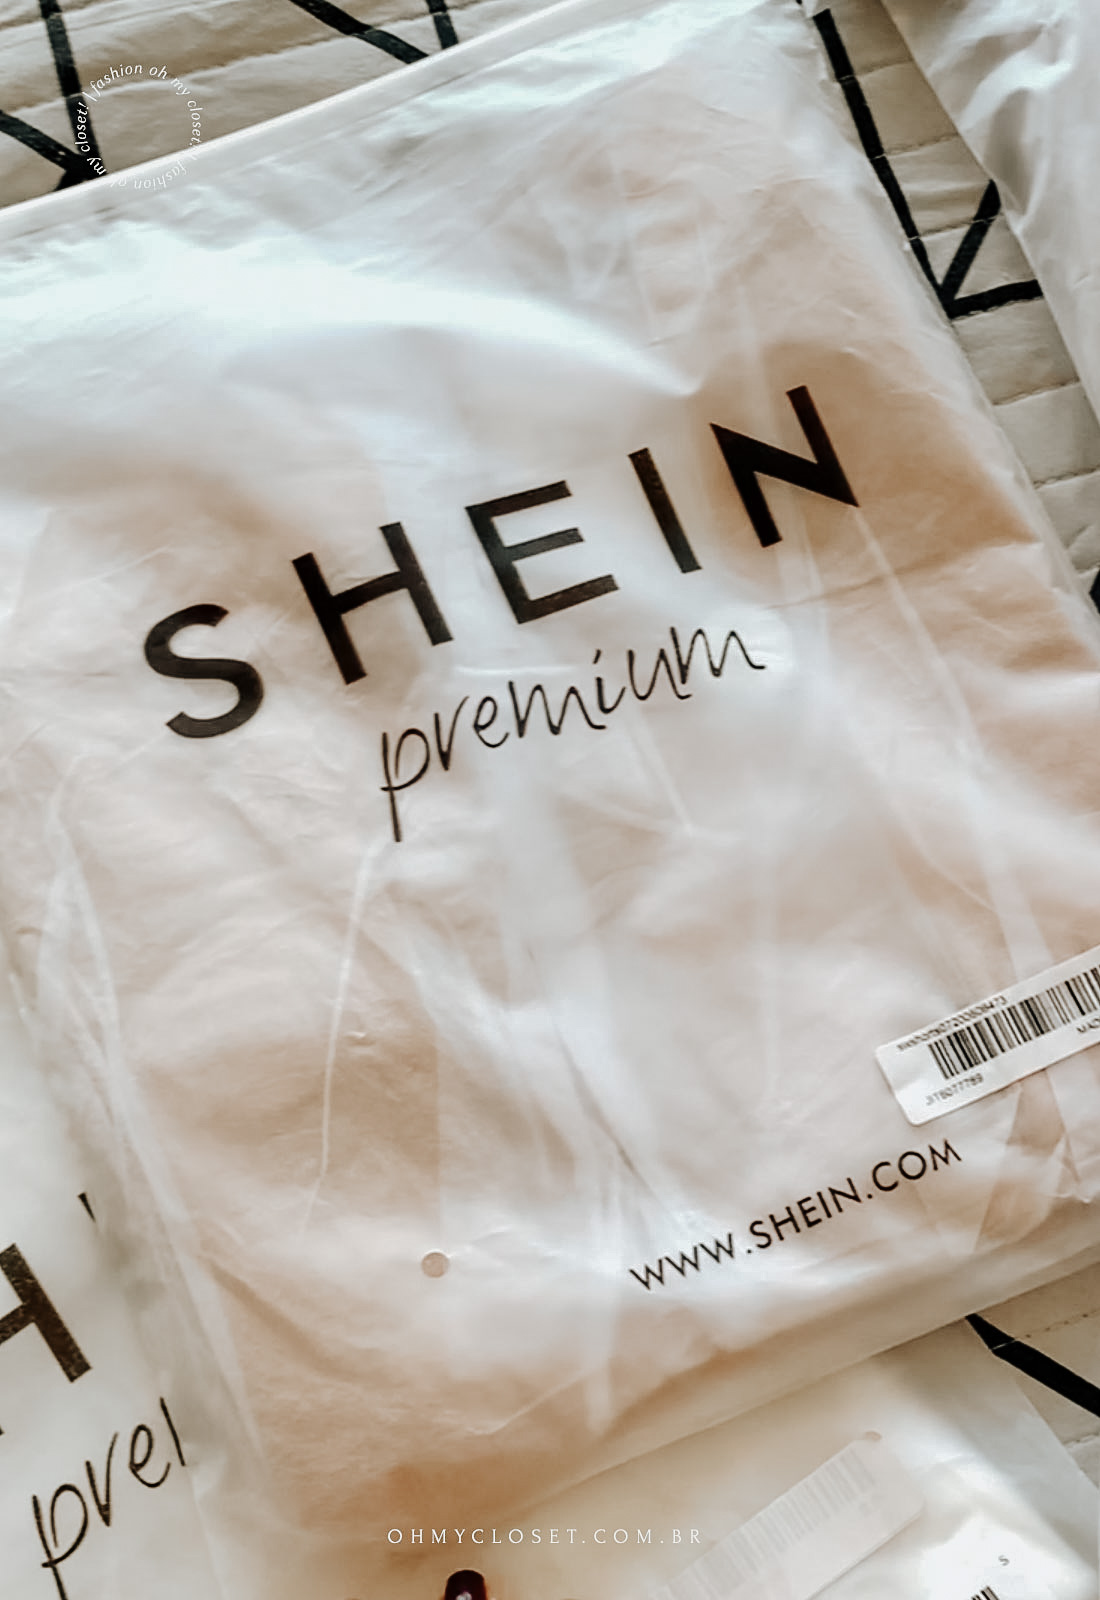 Embalagem da SHEIN premium.